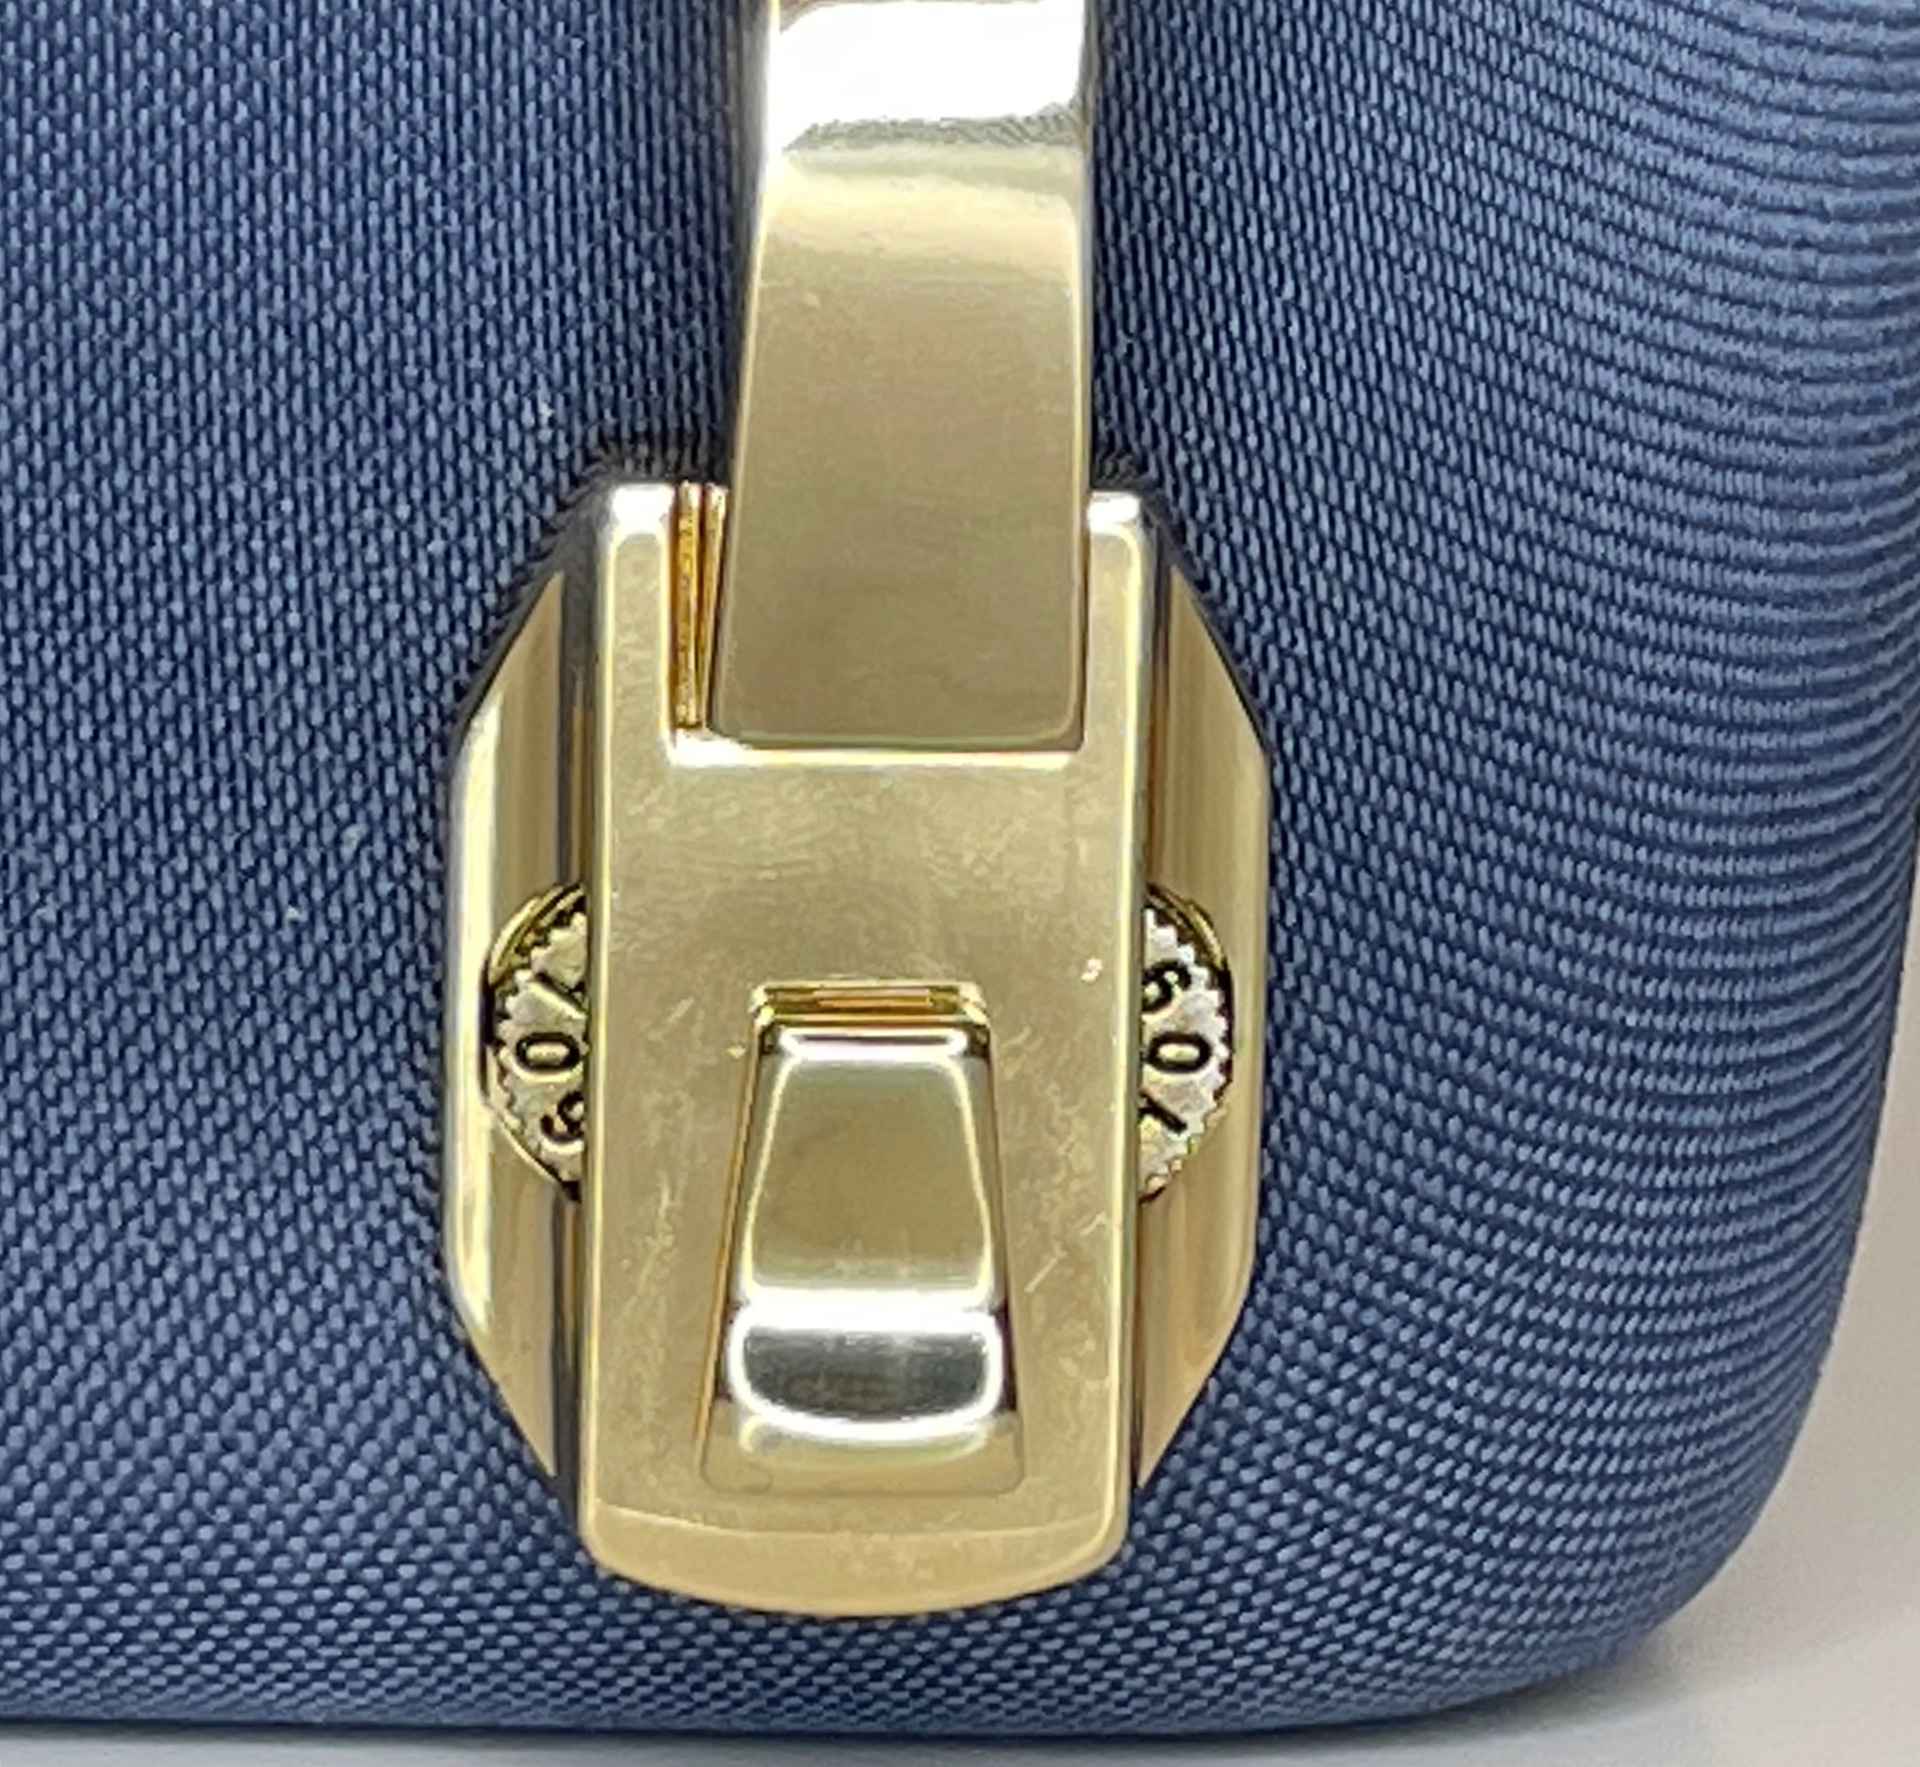 Moxie stash box with zipper code lock